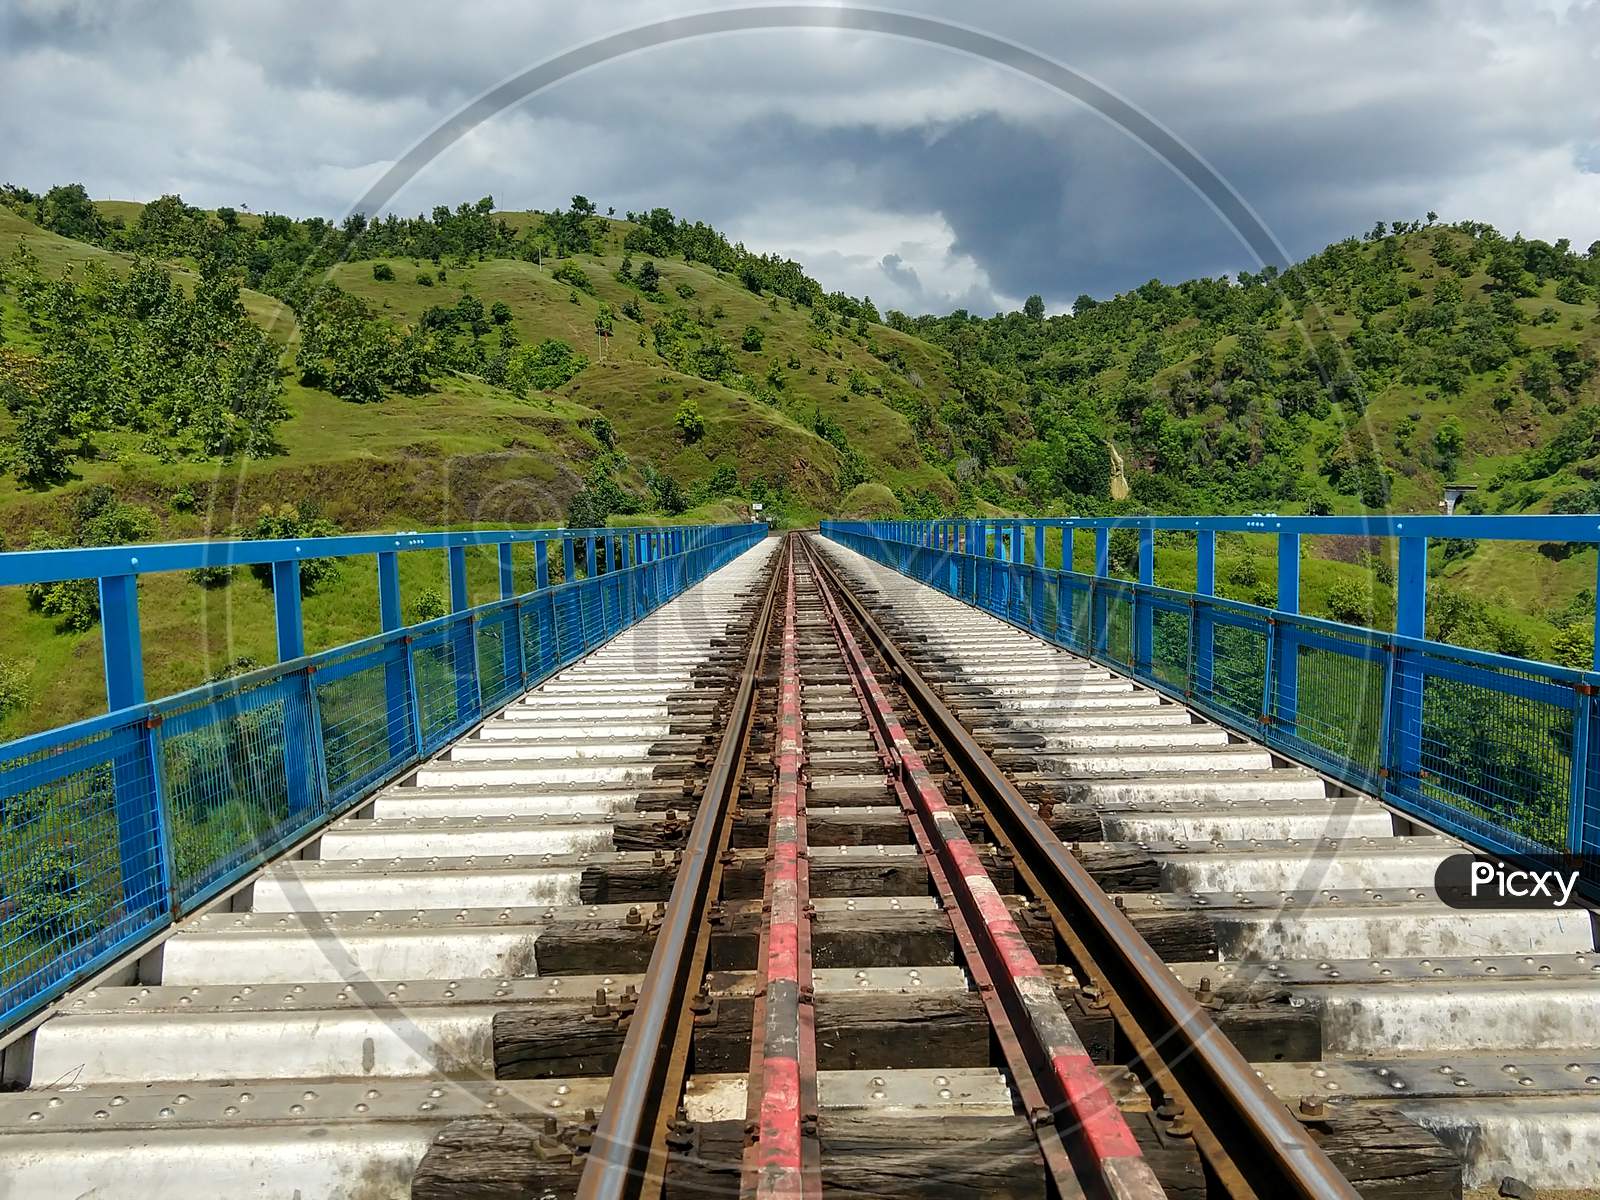 Meter Gauge Railway Tracks Over A Bridge In A Hilly Area- Indore, Madhya Pradesh, India